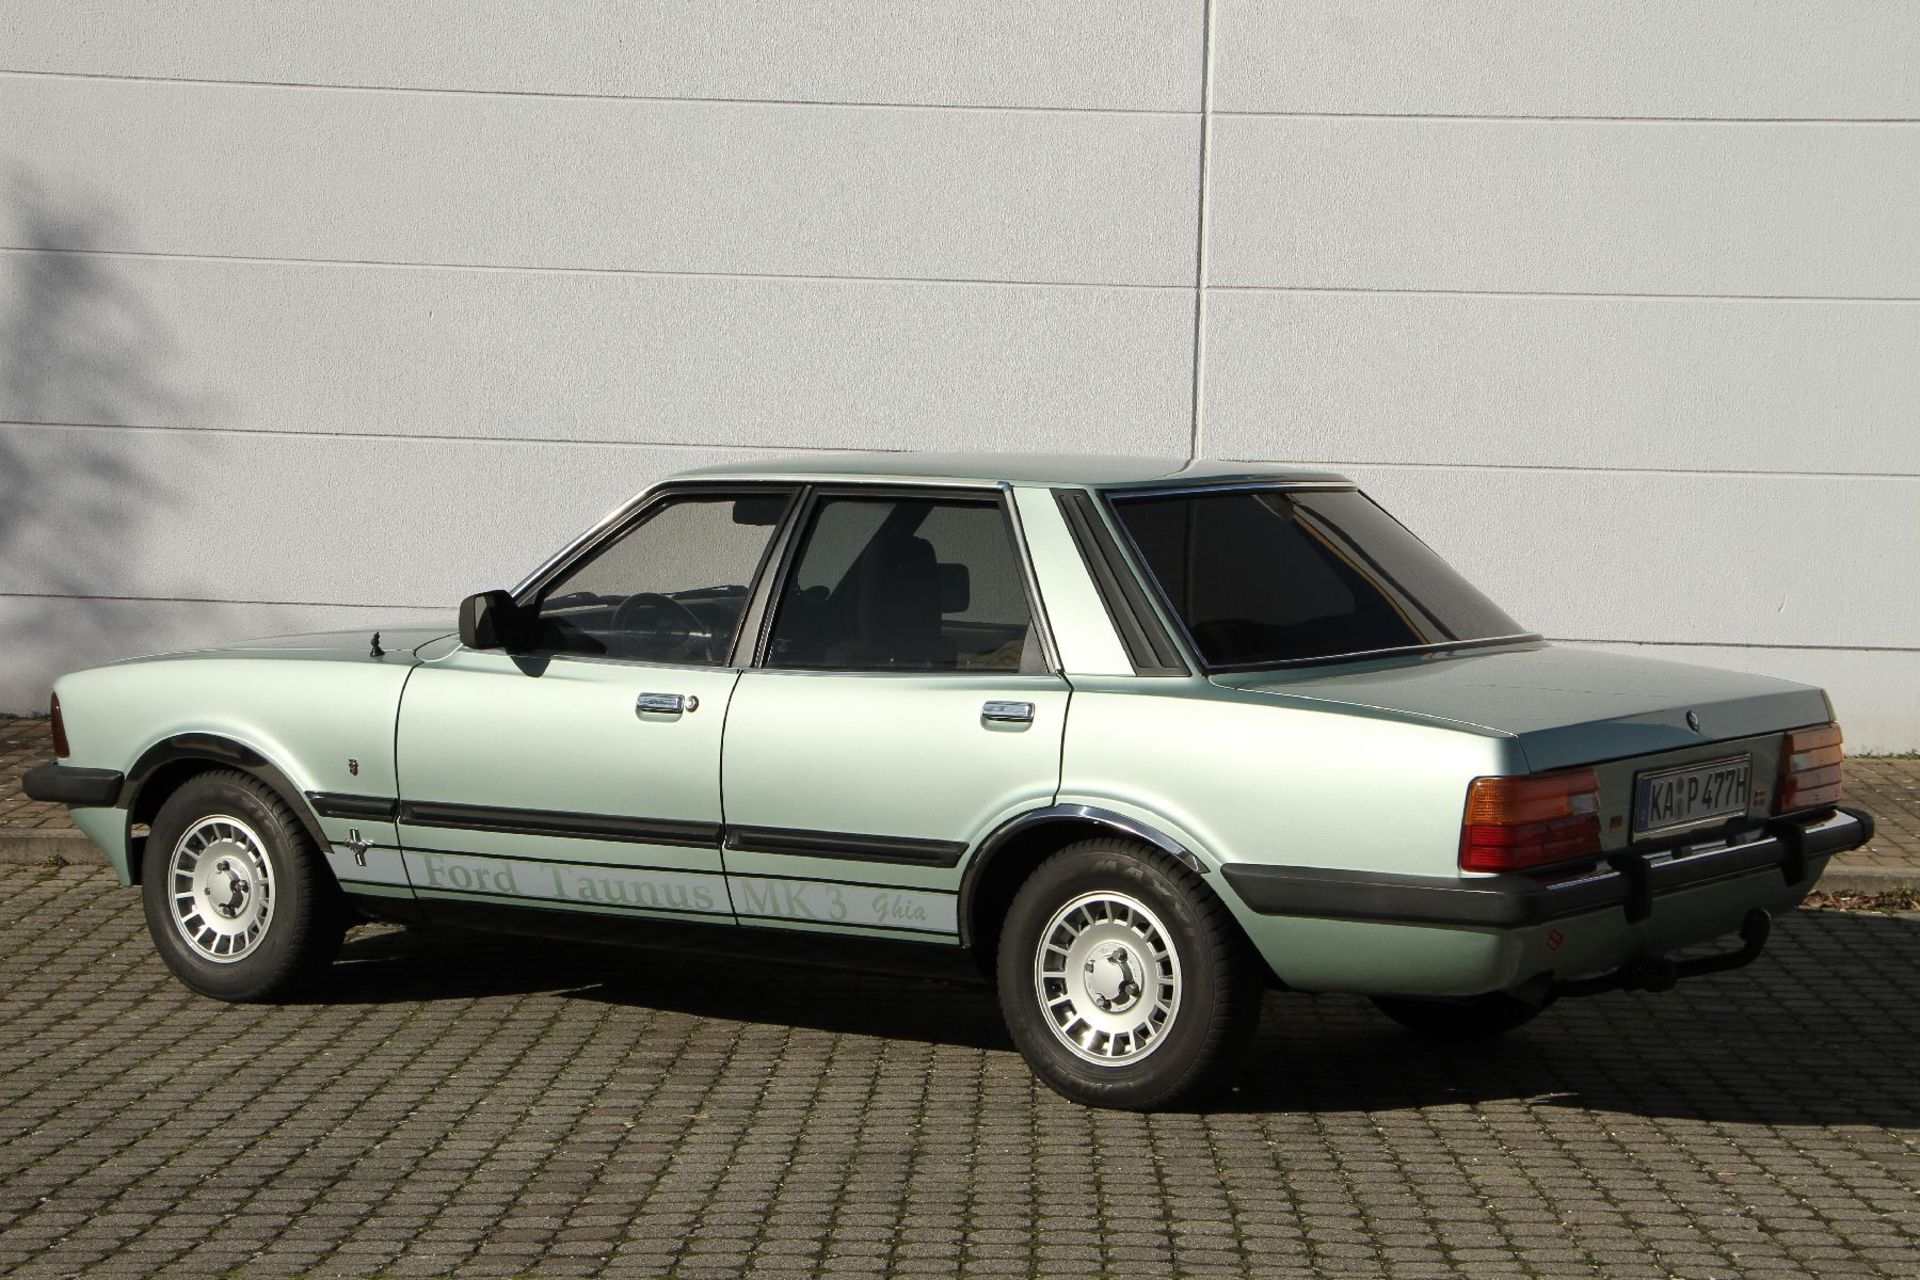 Ford Taunus II 2000 Ghia Limousine, Chassis Number: WF0FXXGBBFBU29364, first registered 03/1981, - Bild 4 aus 15